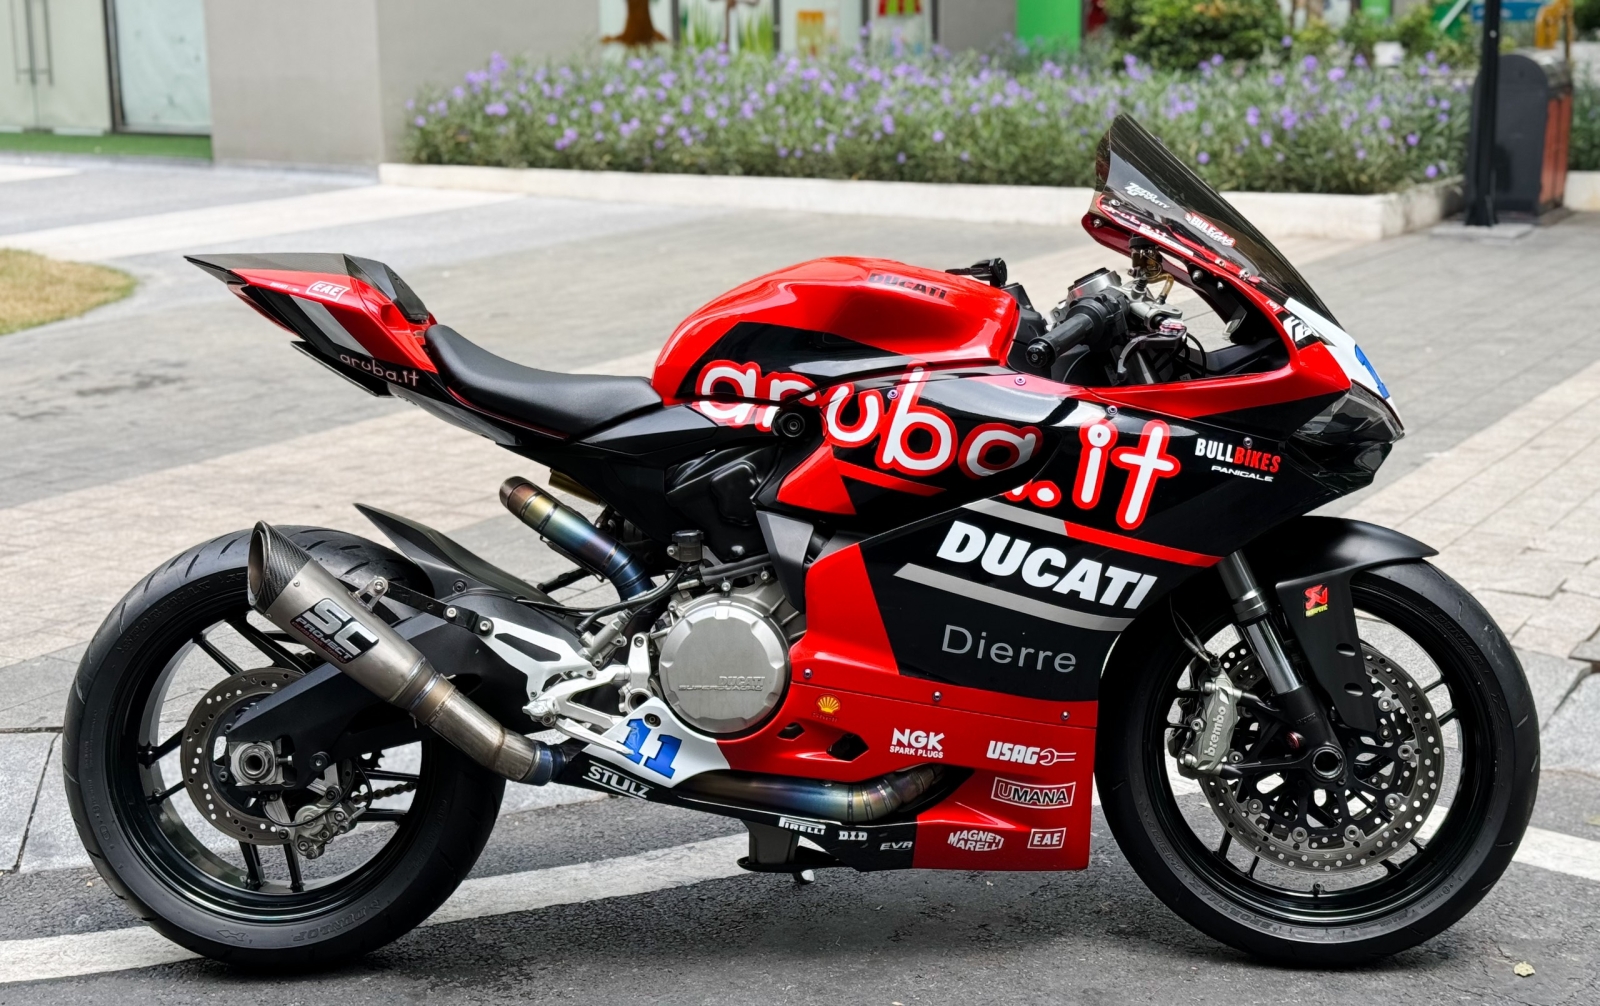 458 . Ducati 899 Panigale model 2015 